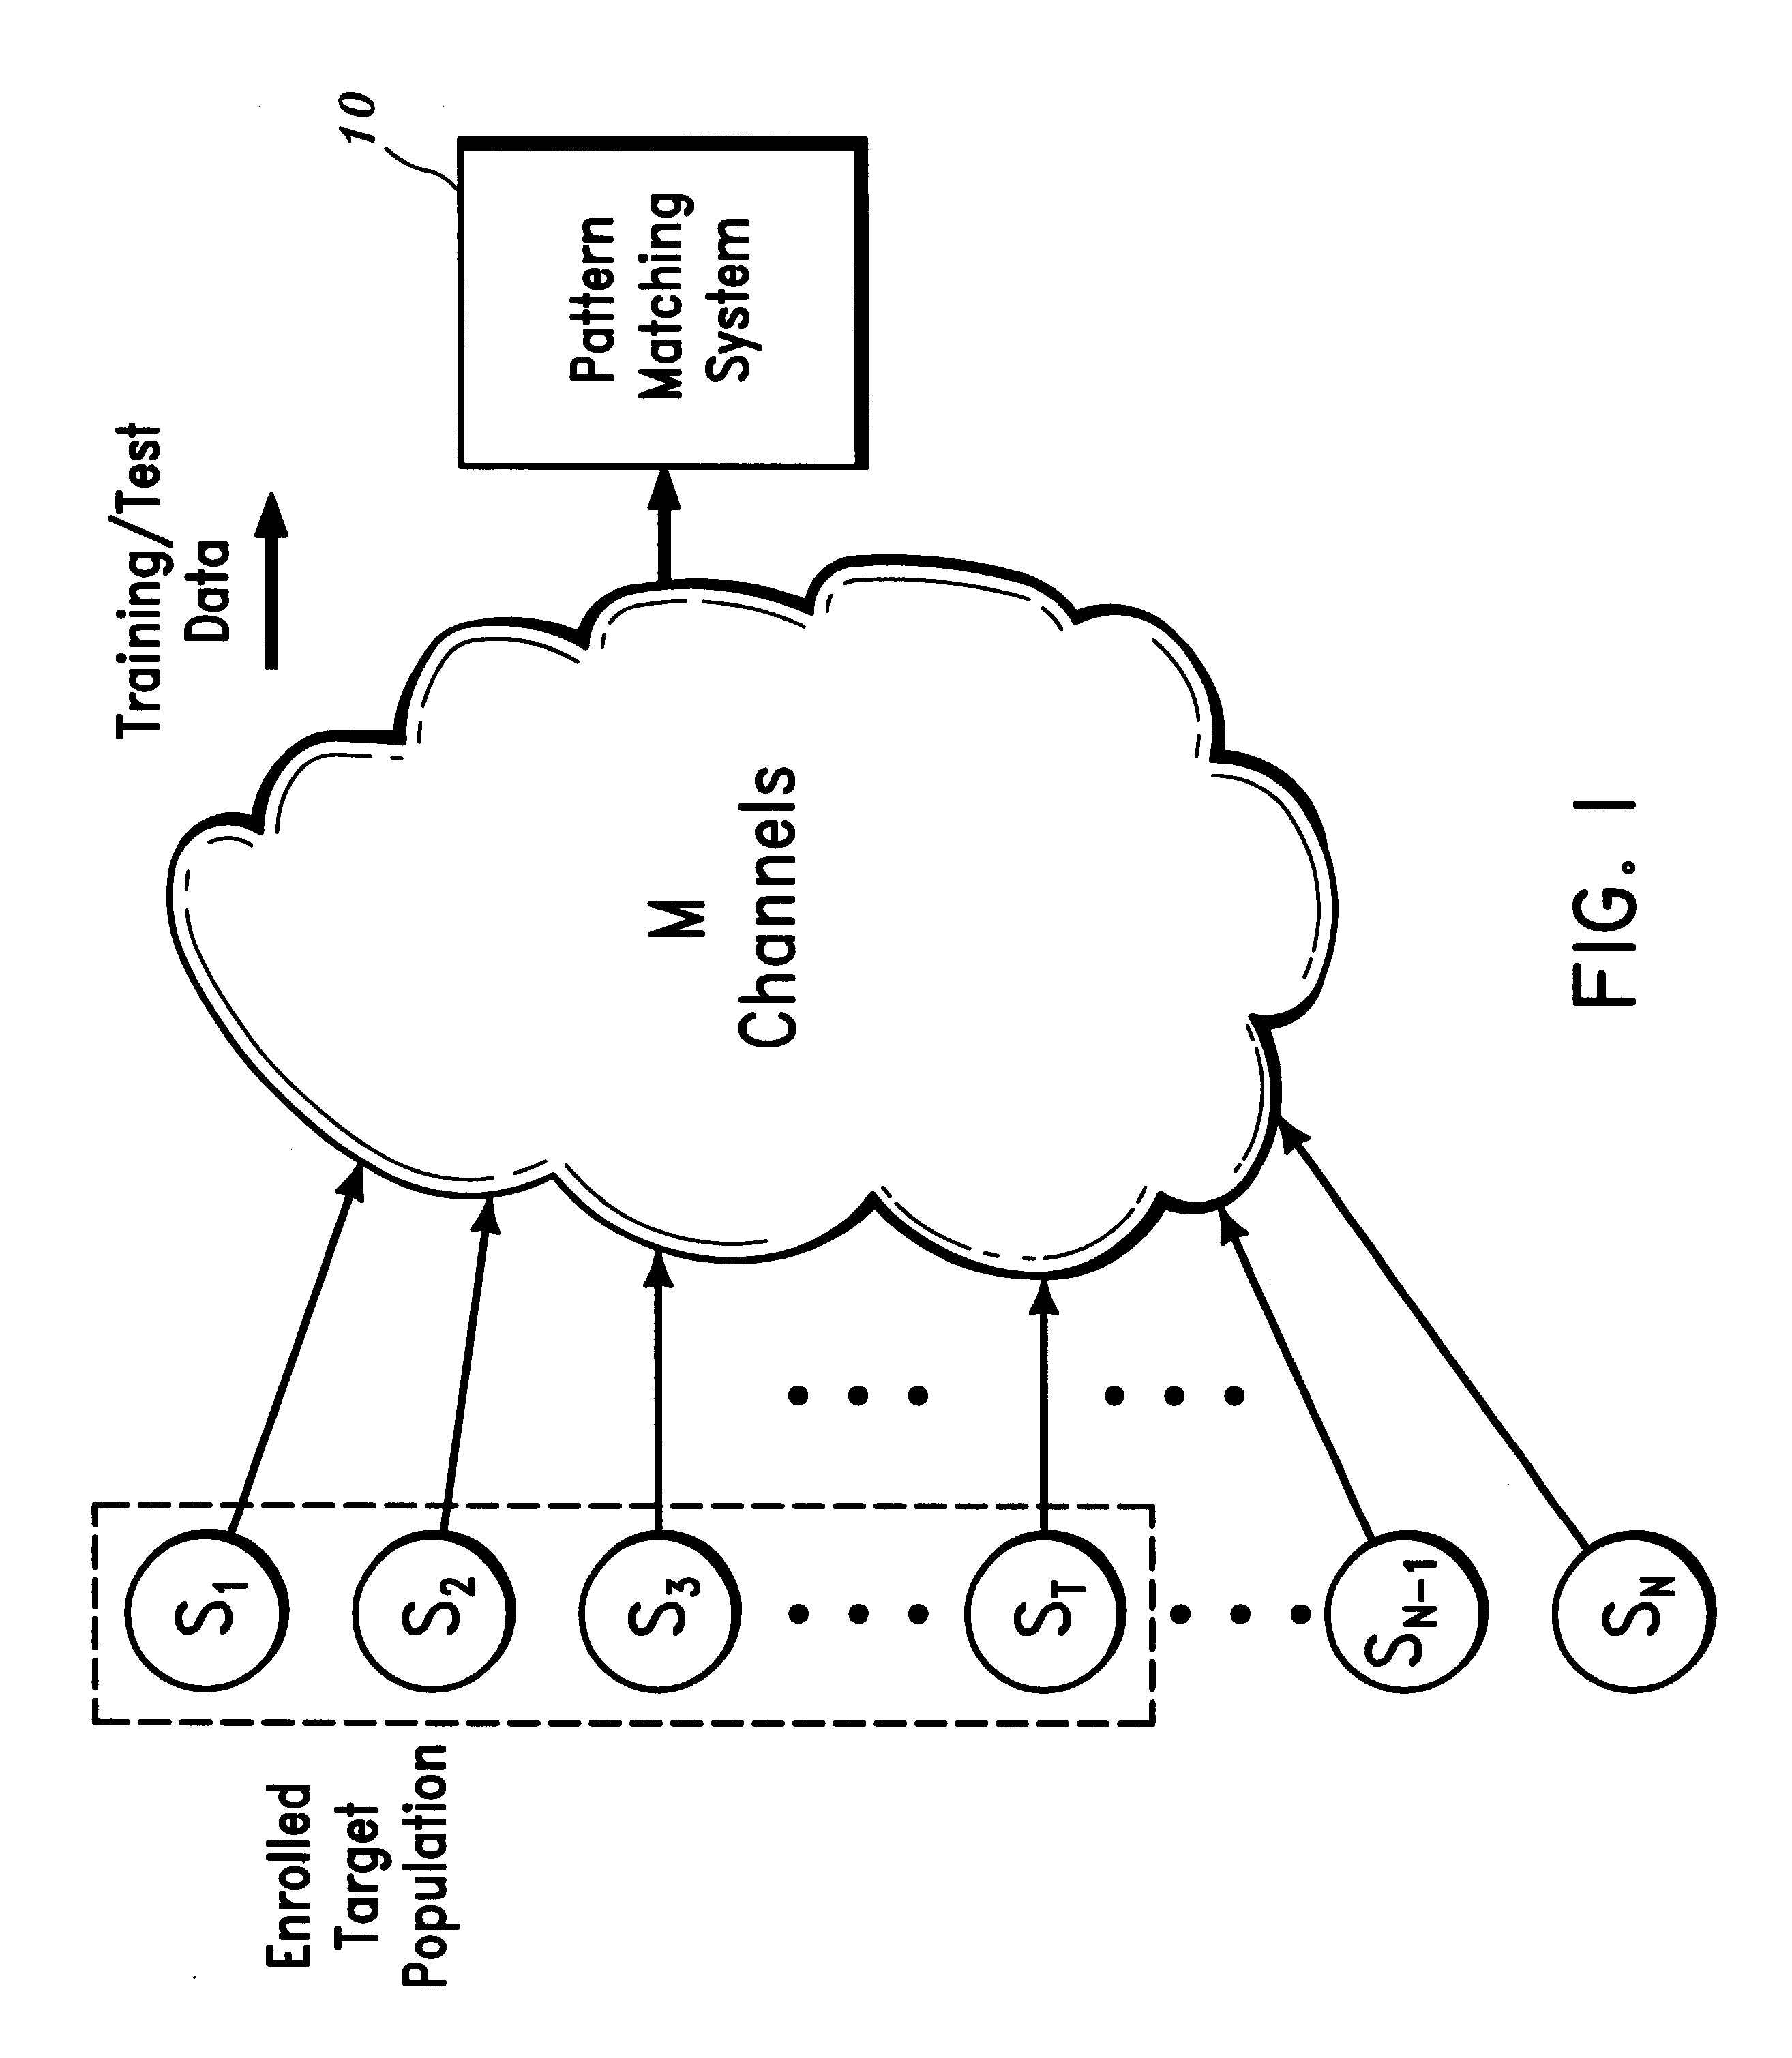 Method and apparatus for multi-environment speaker verification